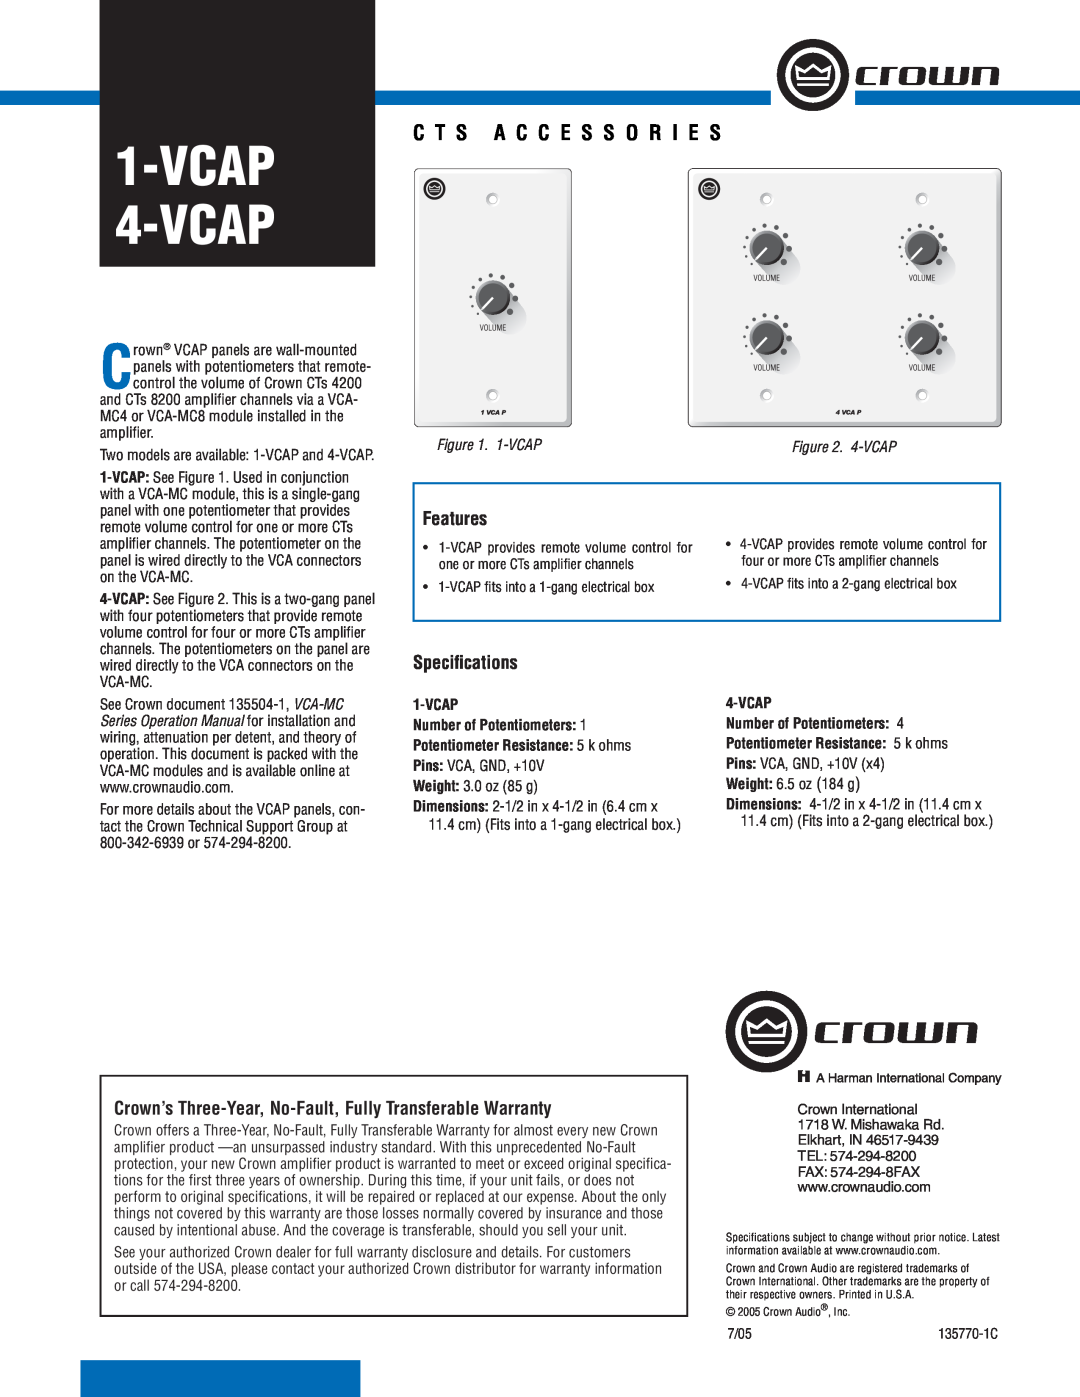 Crown Audio specifications VCAP 4-VCAP, C T S A C C E S S O R I E S, Features, Speciﬁcations, 1-VCAPFigure 2. 4-VCAP 